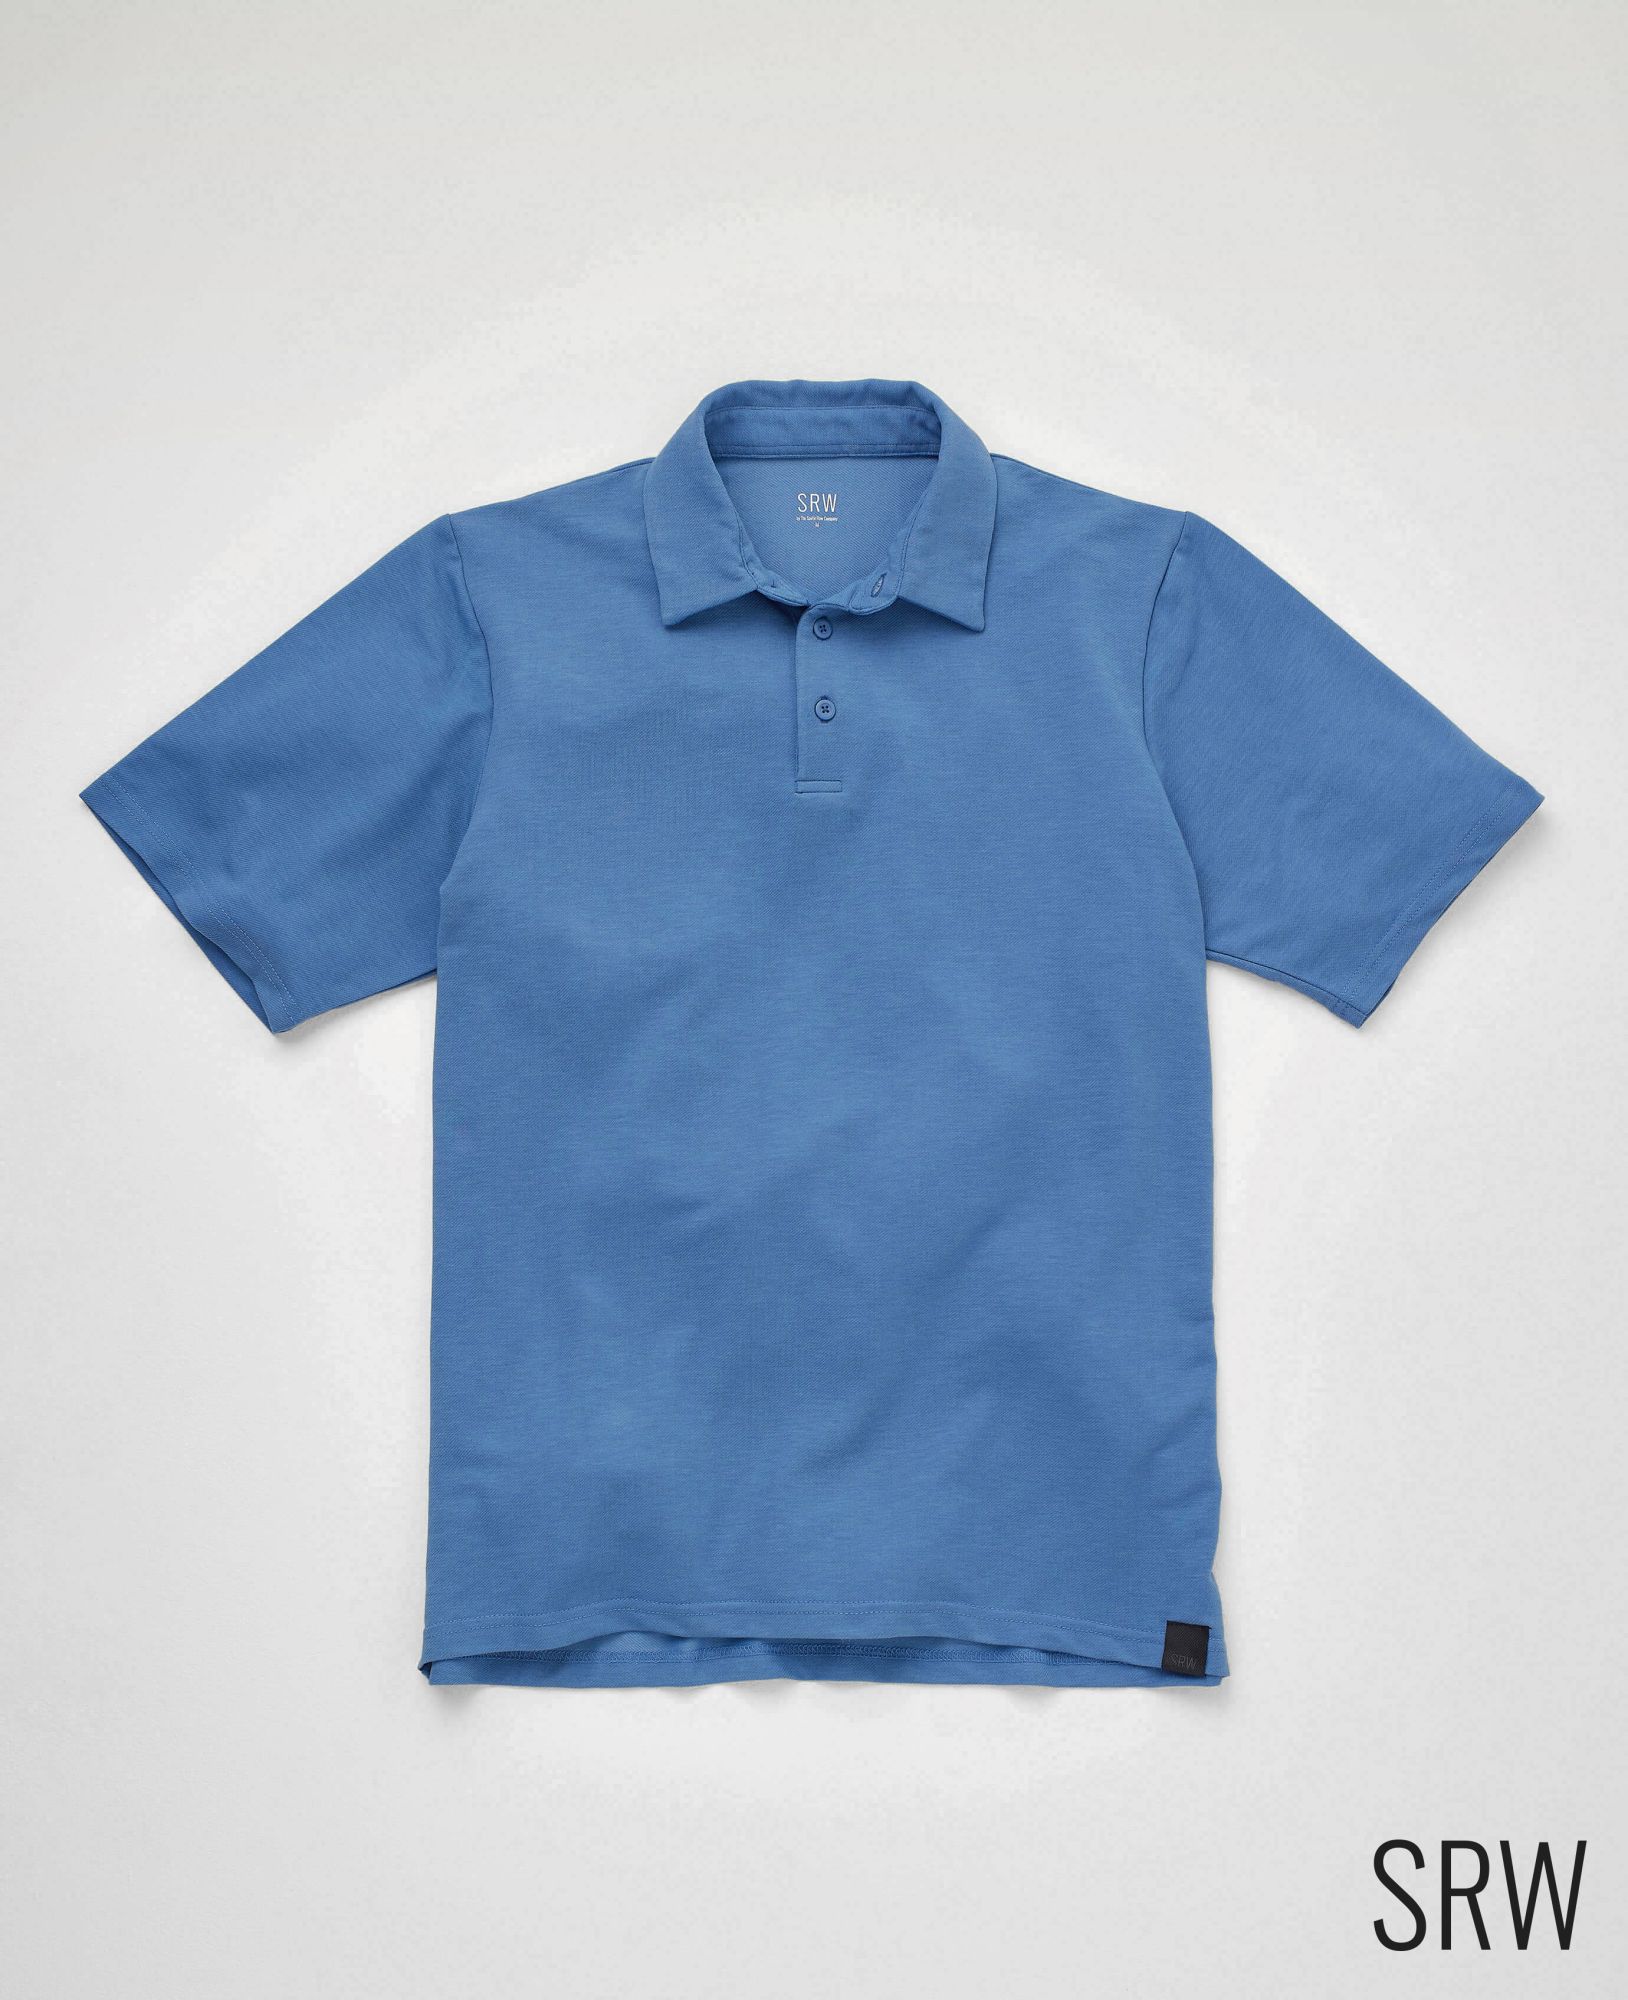 SRW Active Non-Iron Denim Blue Short Sleeve Polo Shirt XXXL